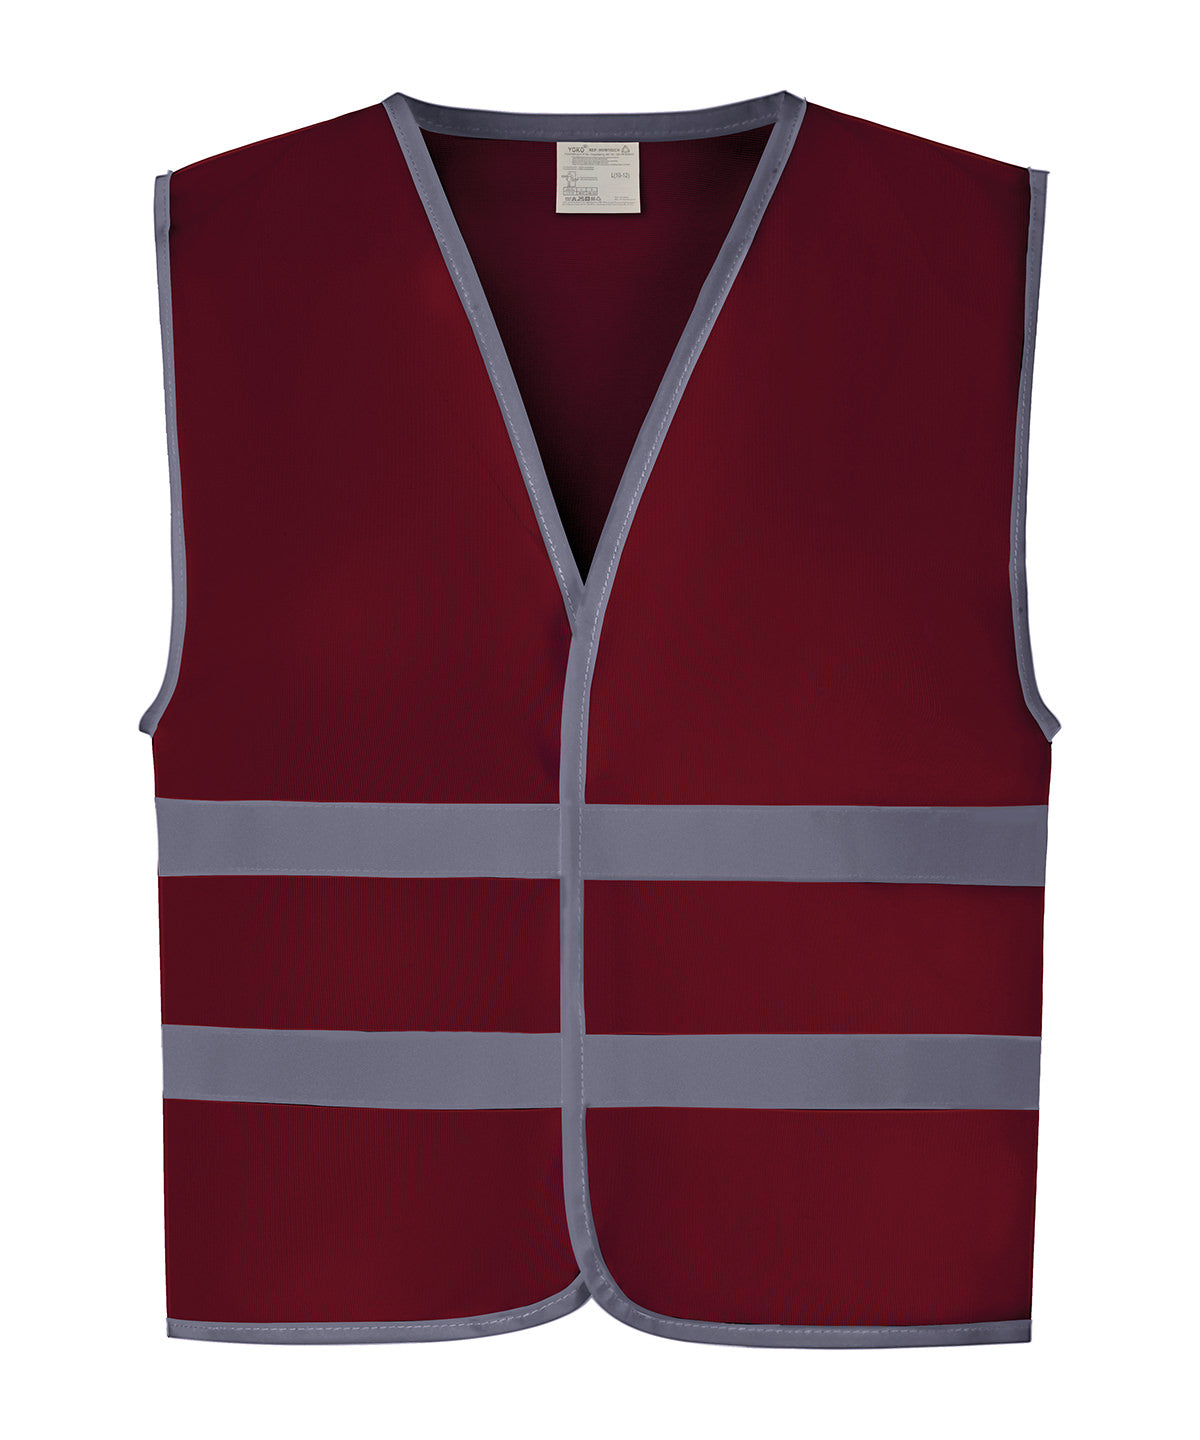 Personalised Safety Vests - Neon Pink Yoko Hi-vis reflective border kids waistcoat (HVW102CH)